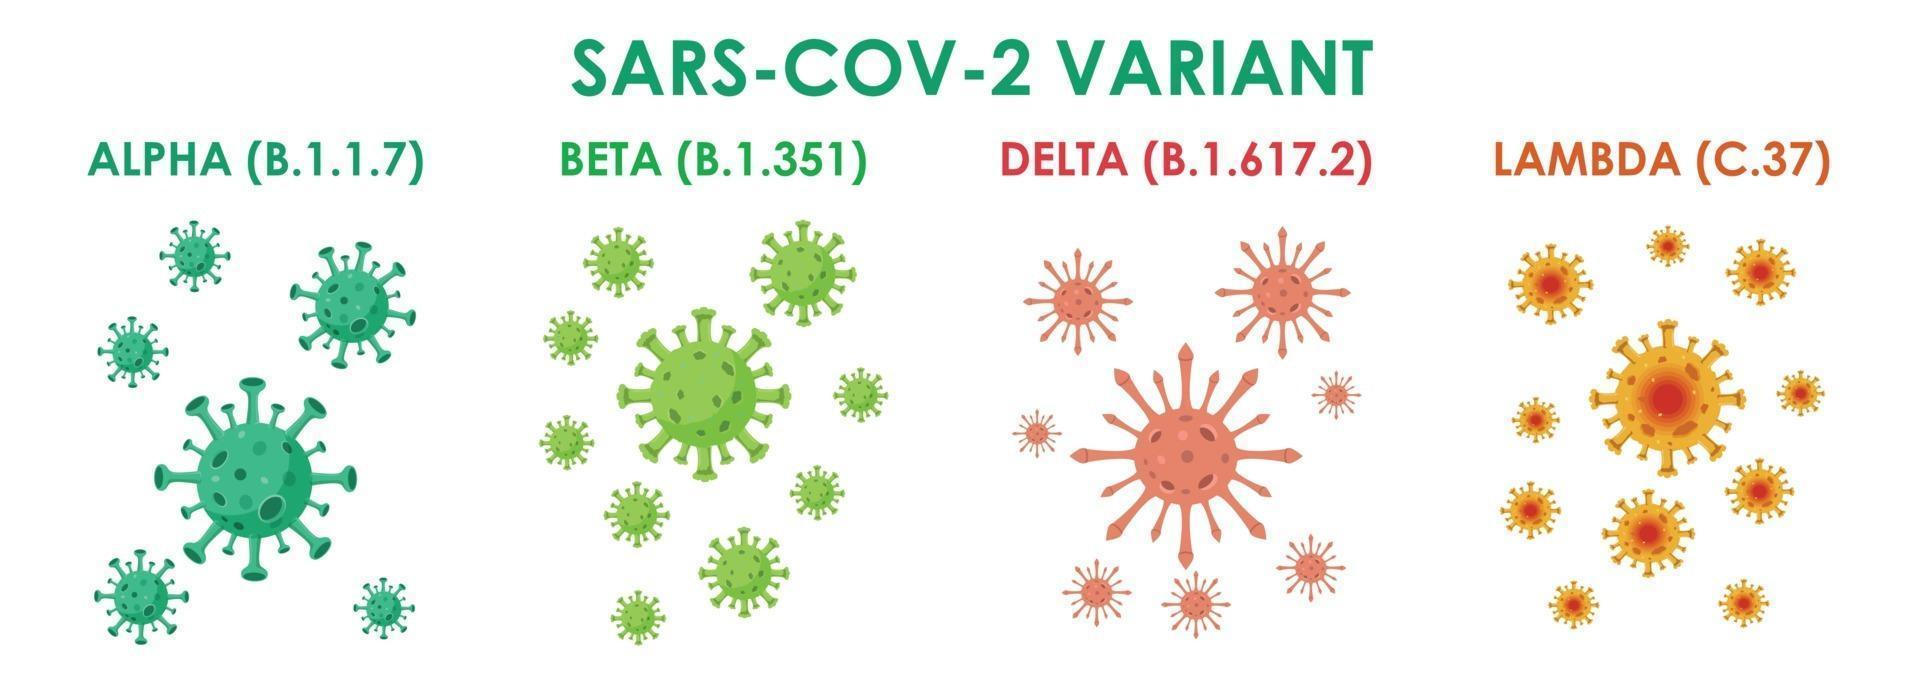 sars-cov-2 variant virus covid-19 illustratie vector